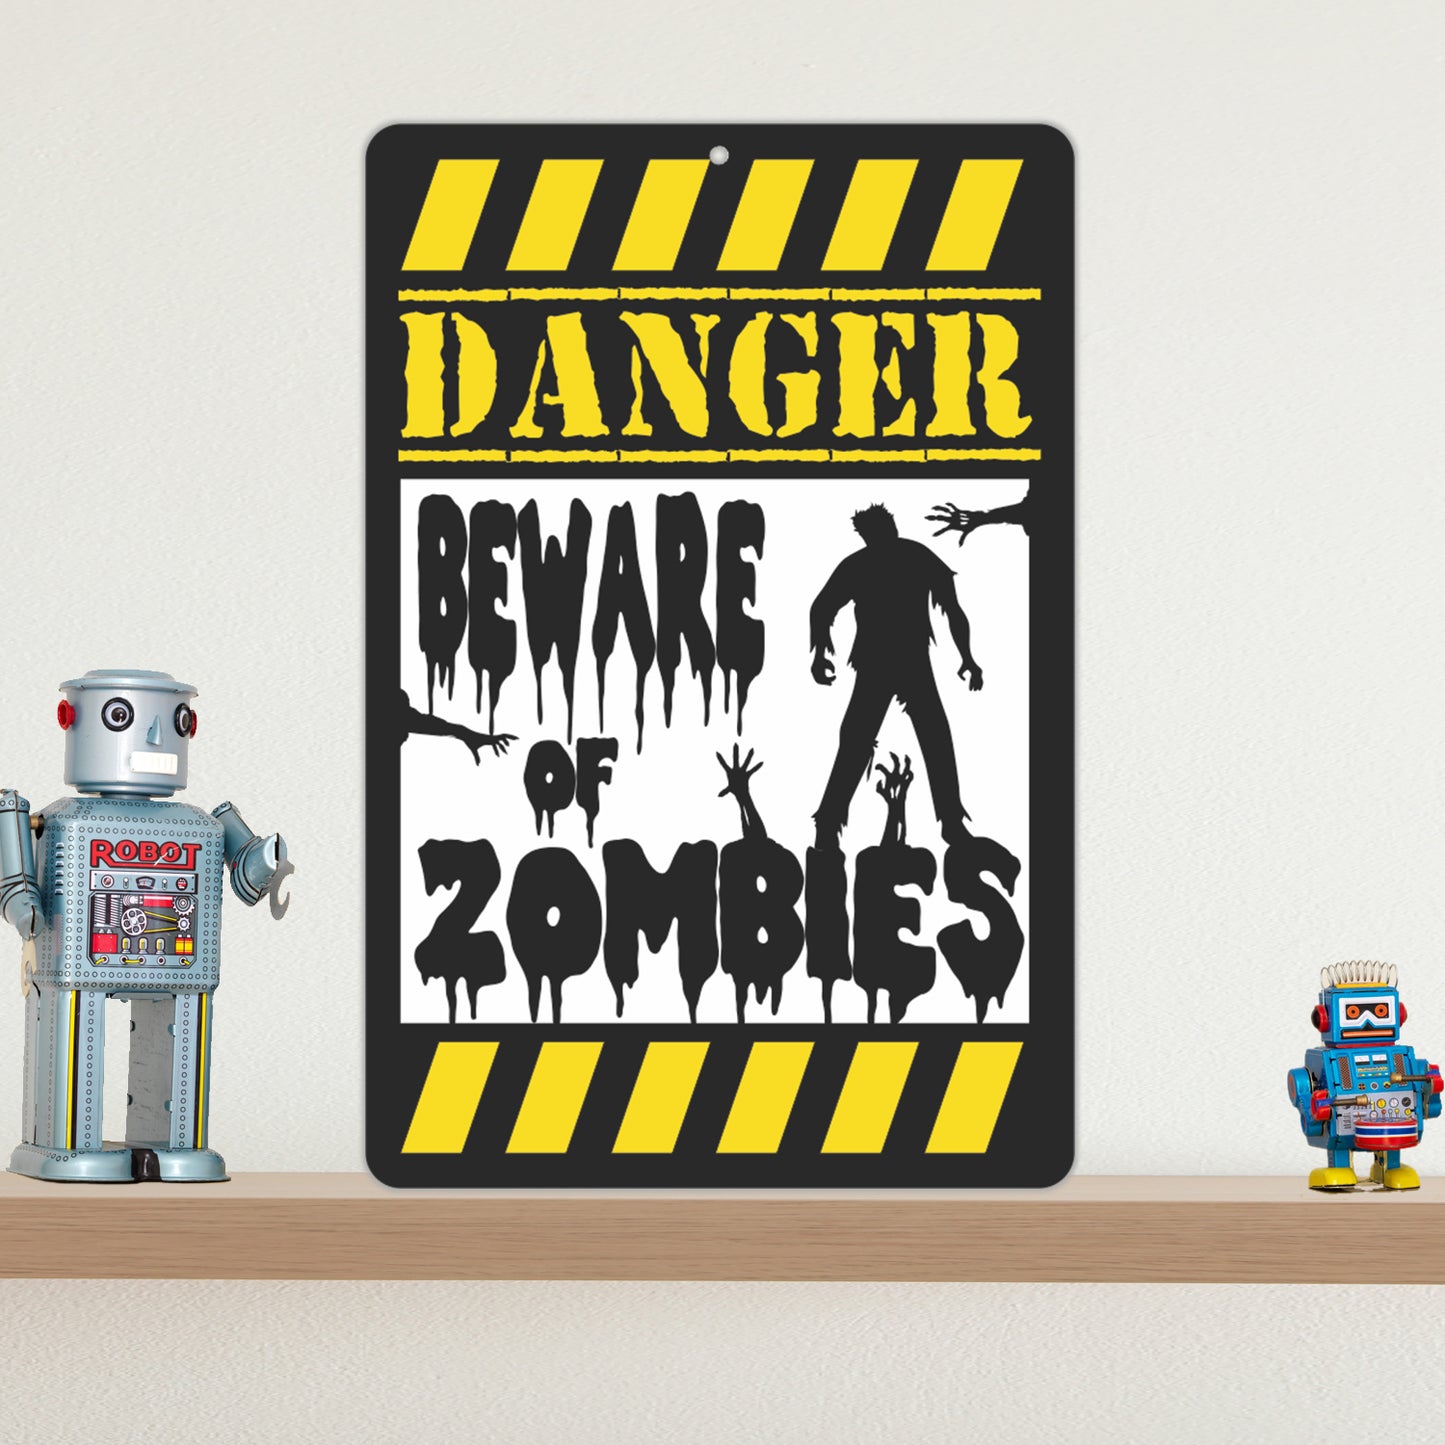 Danger Beware of Zombies Sign, Indoor and Outdoor Sign - Size 8 x 12